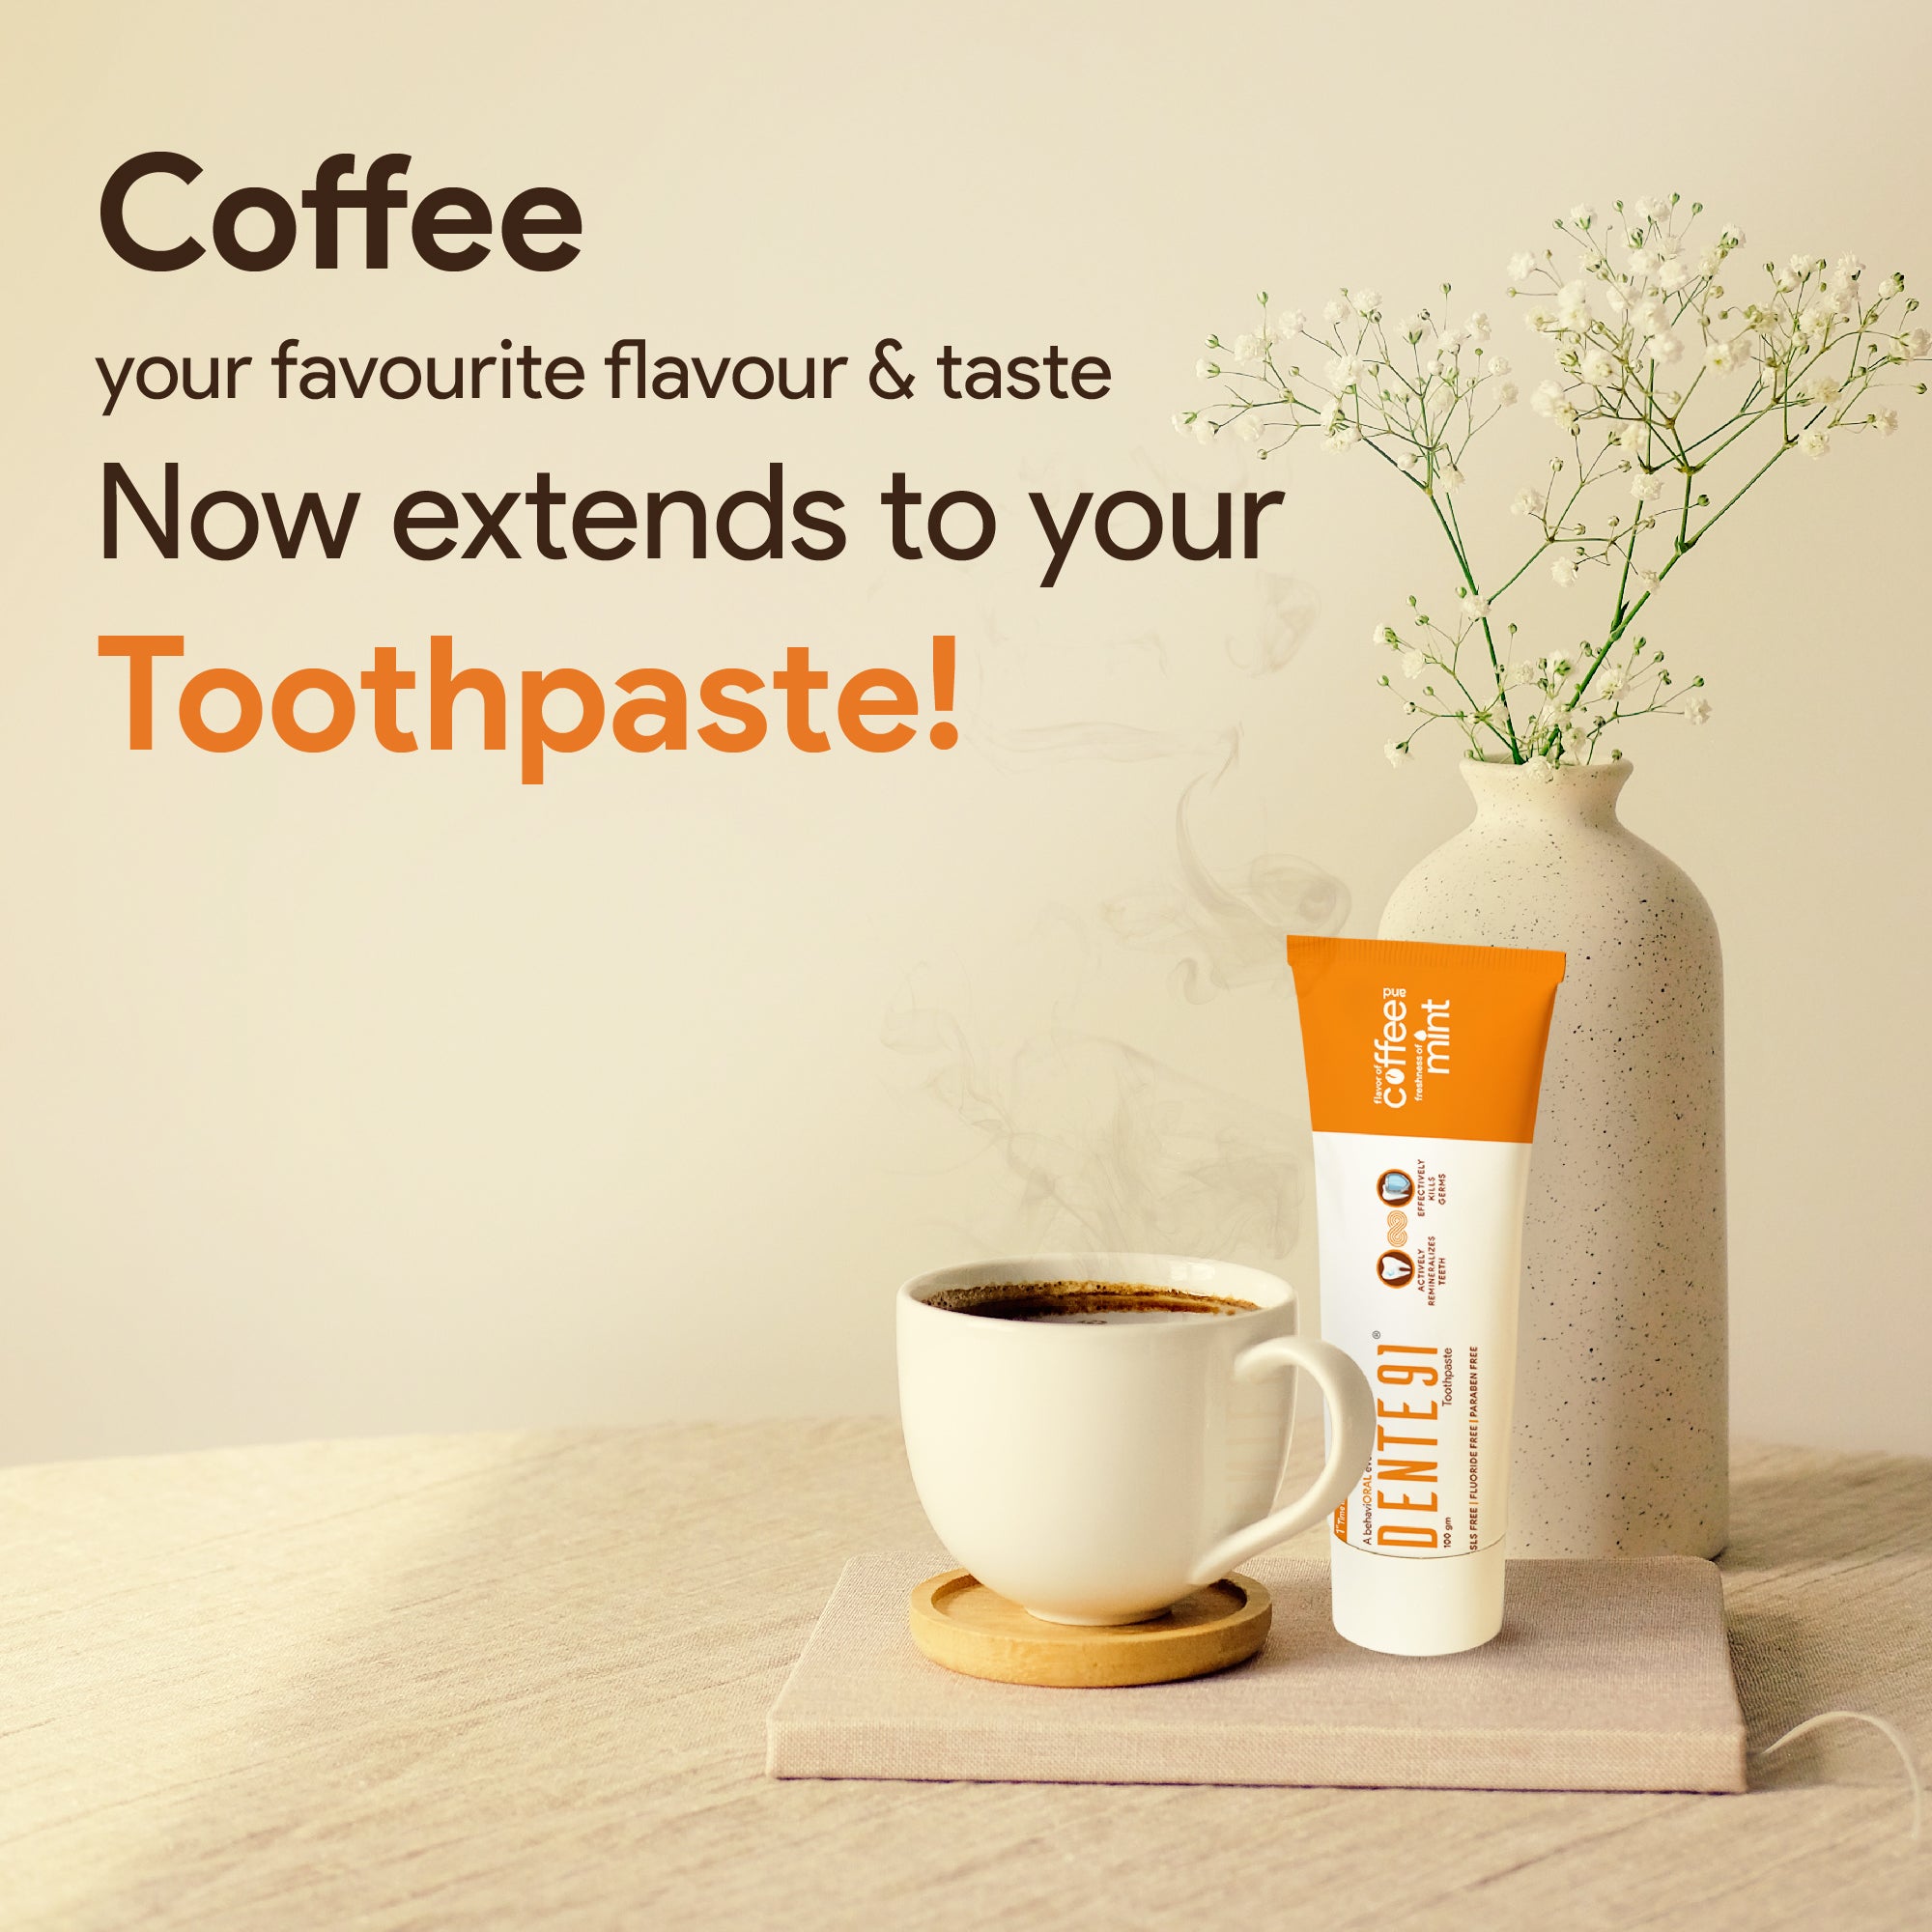 Dente91 Coffee & Mint Toothpaste | Sensitivity Relief | Repairs Cavities | Fights Gum Disease | Reduces Bad Breath | Strengthens Enamel | SLS Free | Fluoride Free | Paraben Free | Pack of 1, 100g